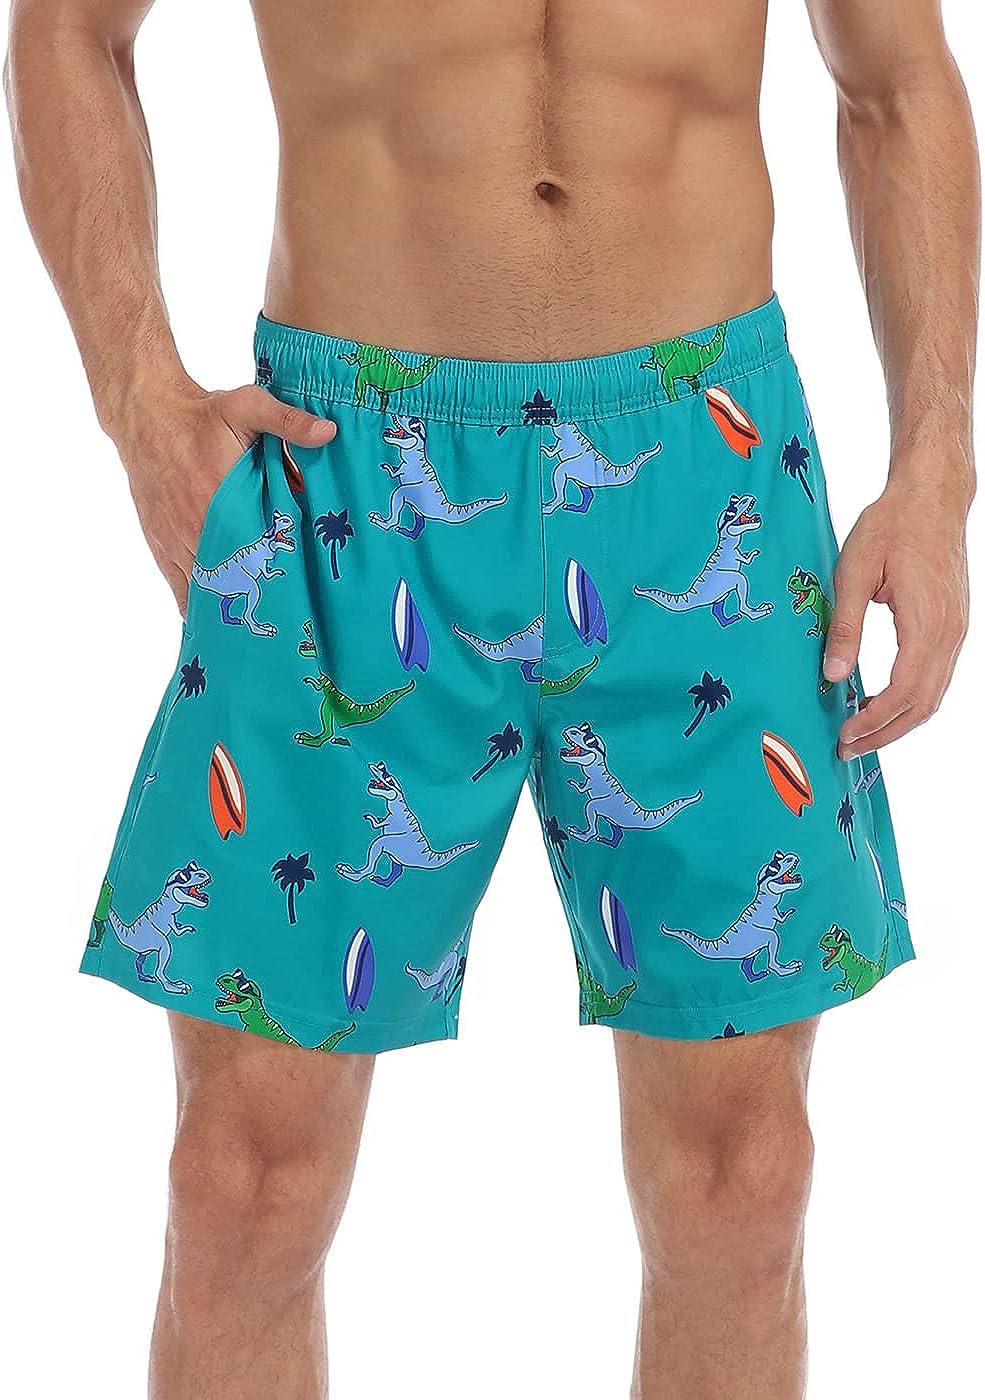 Pedort Biker Shorts Men High Waist Mens Shorts Casual Mens Swim Trunks  Compression Lined Swim Shorts for Outdoor Bathing Suit Shorts Khaki,3XL